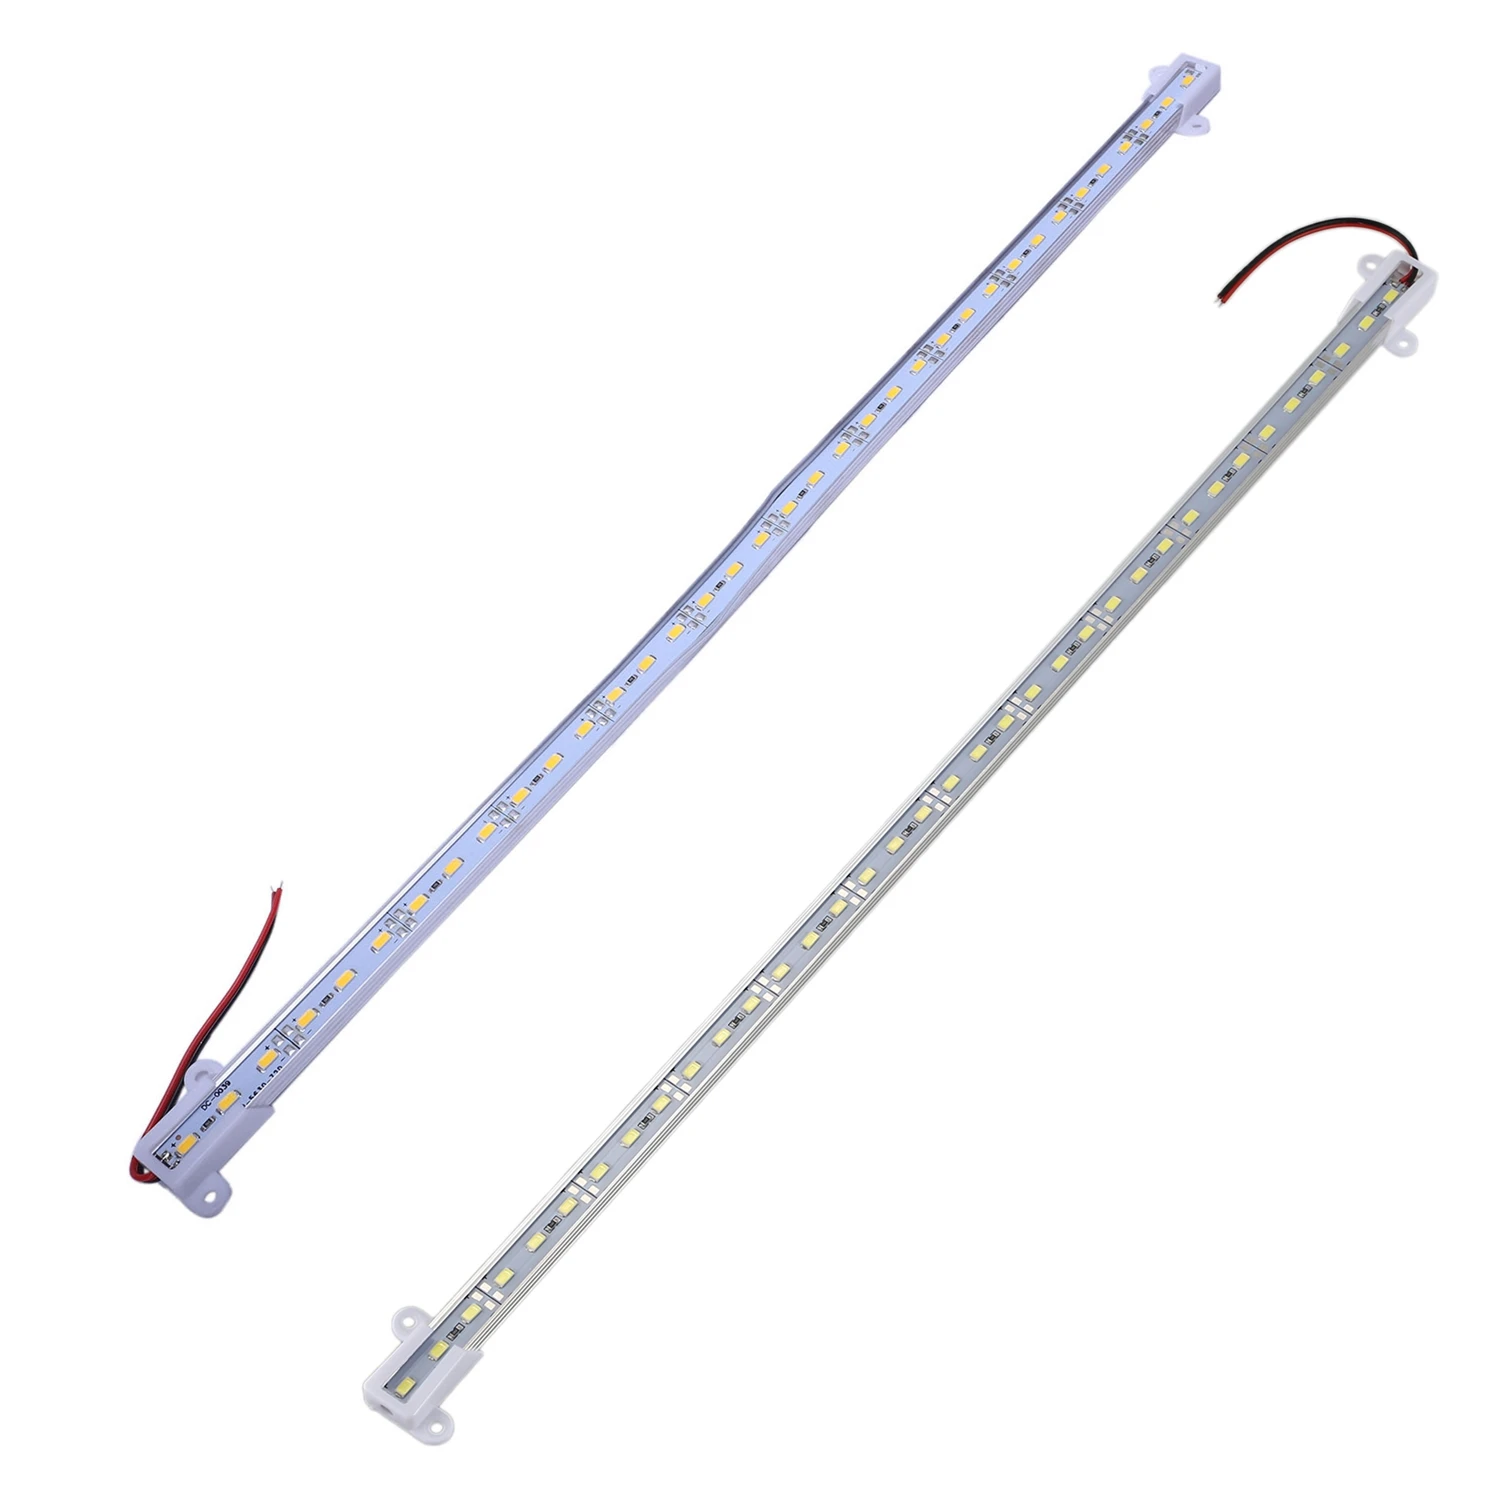 

2 Pcs 50CM 12V 36 LED 5630 SMD Hard Strip Bar Light Aluminum Rigid White & Warm White